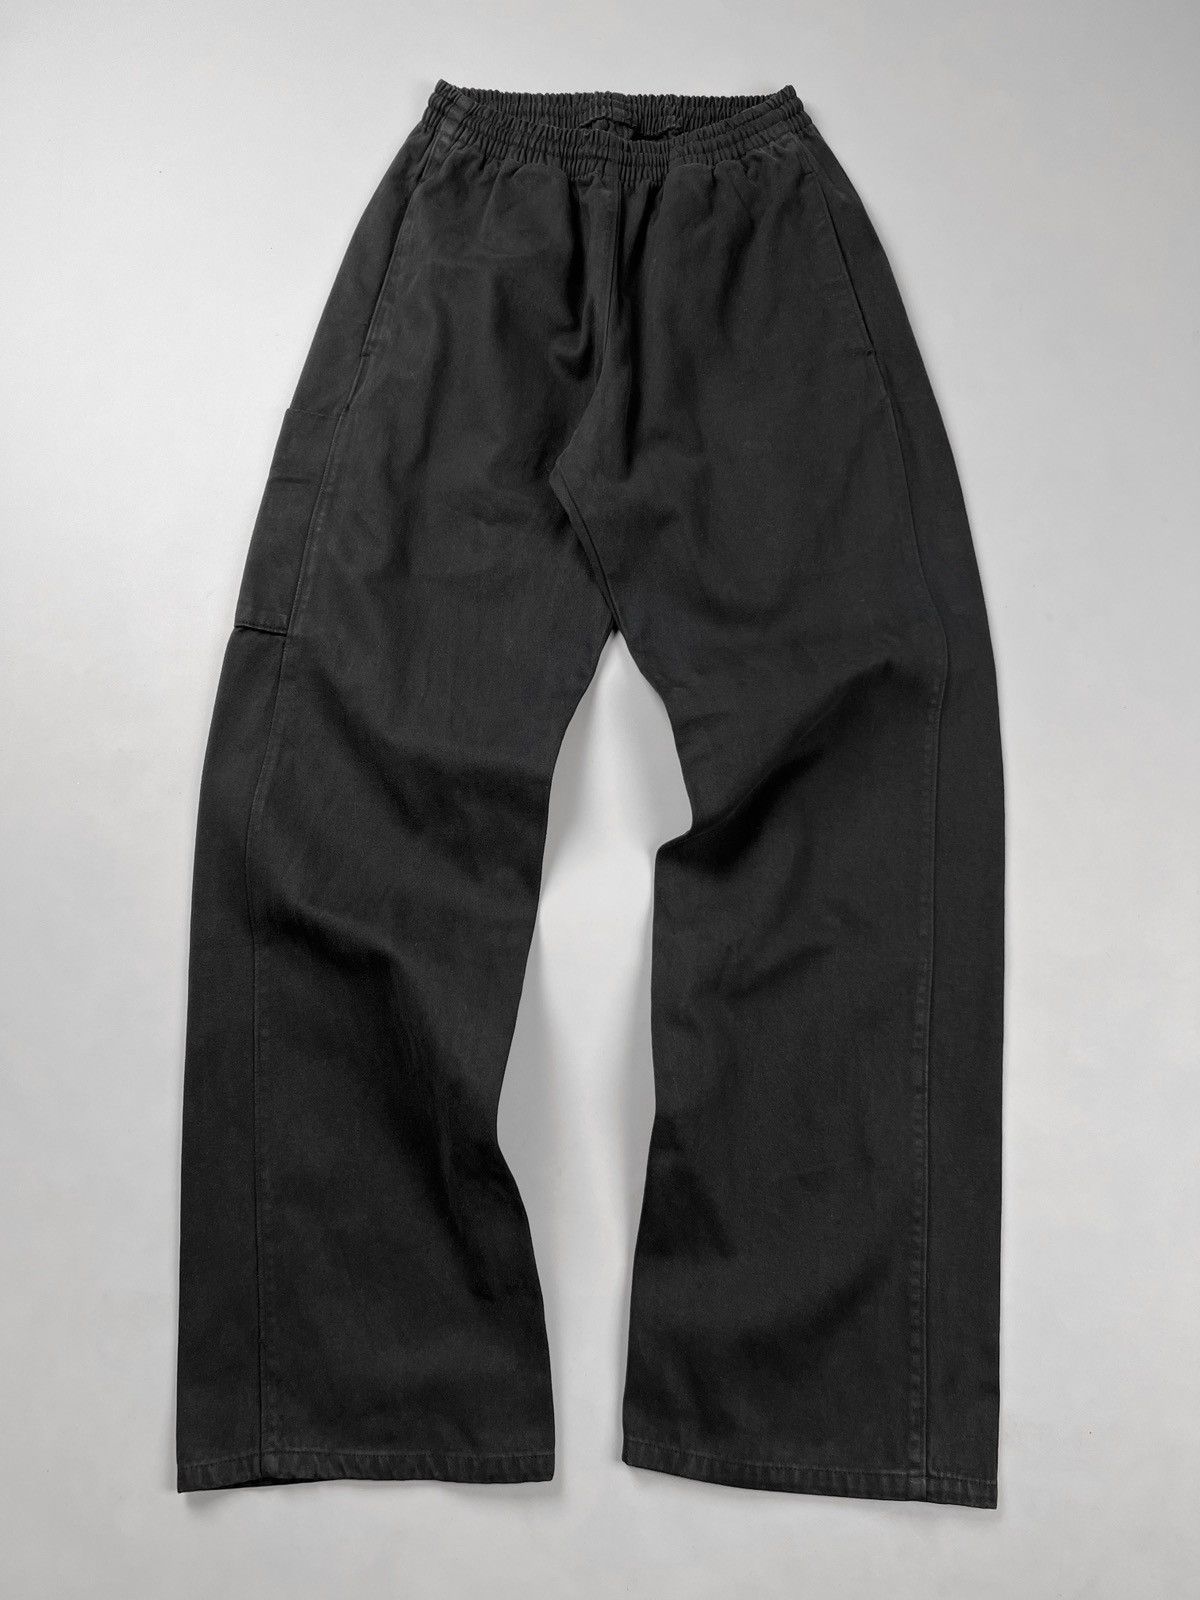 Pre-owned Balenciaga X Gap Yeezy Gap Sateen Cargo Pants Engineered By Balenciaga In Black